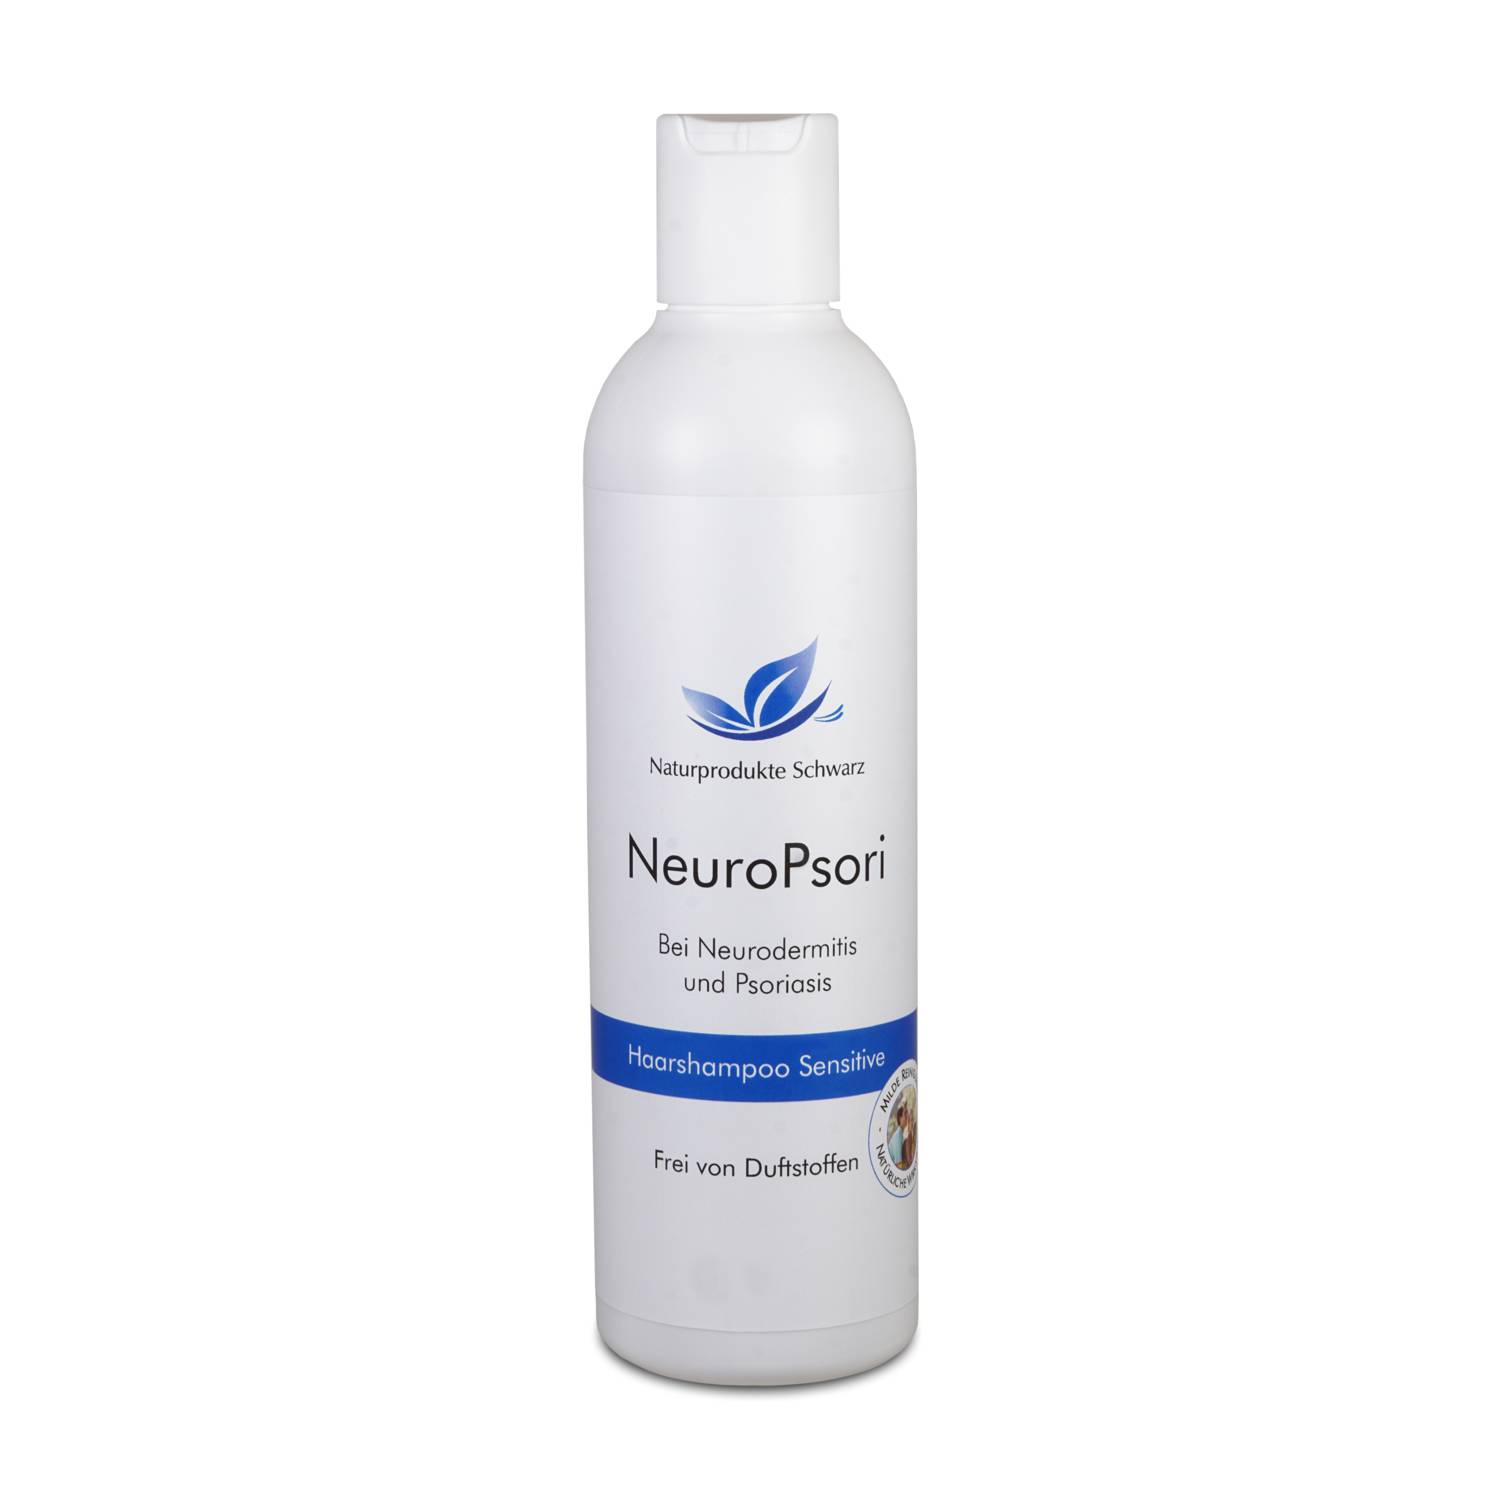 NeuroPsori Shampoo Sensitive bei Neurodermitis, parfumfrei, ohne Silikone & Sulfate